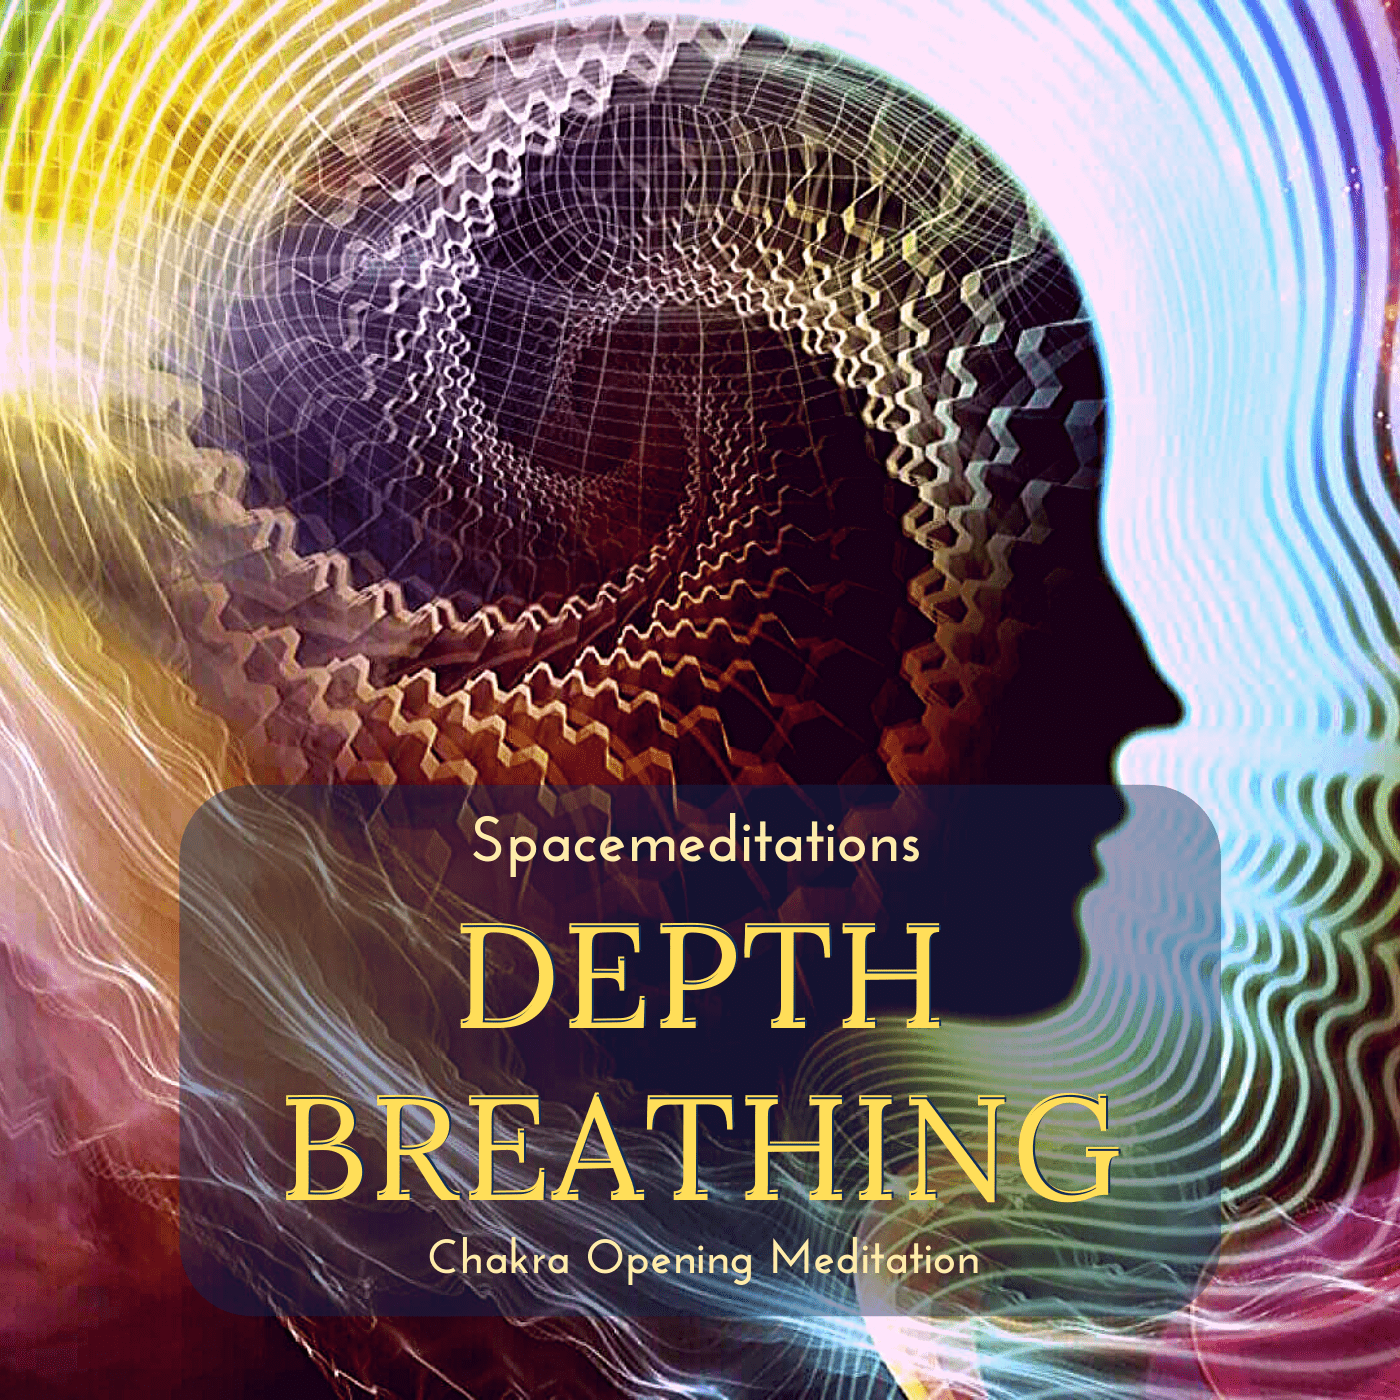 Depth breathing. Spacemeditations